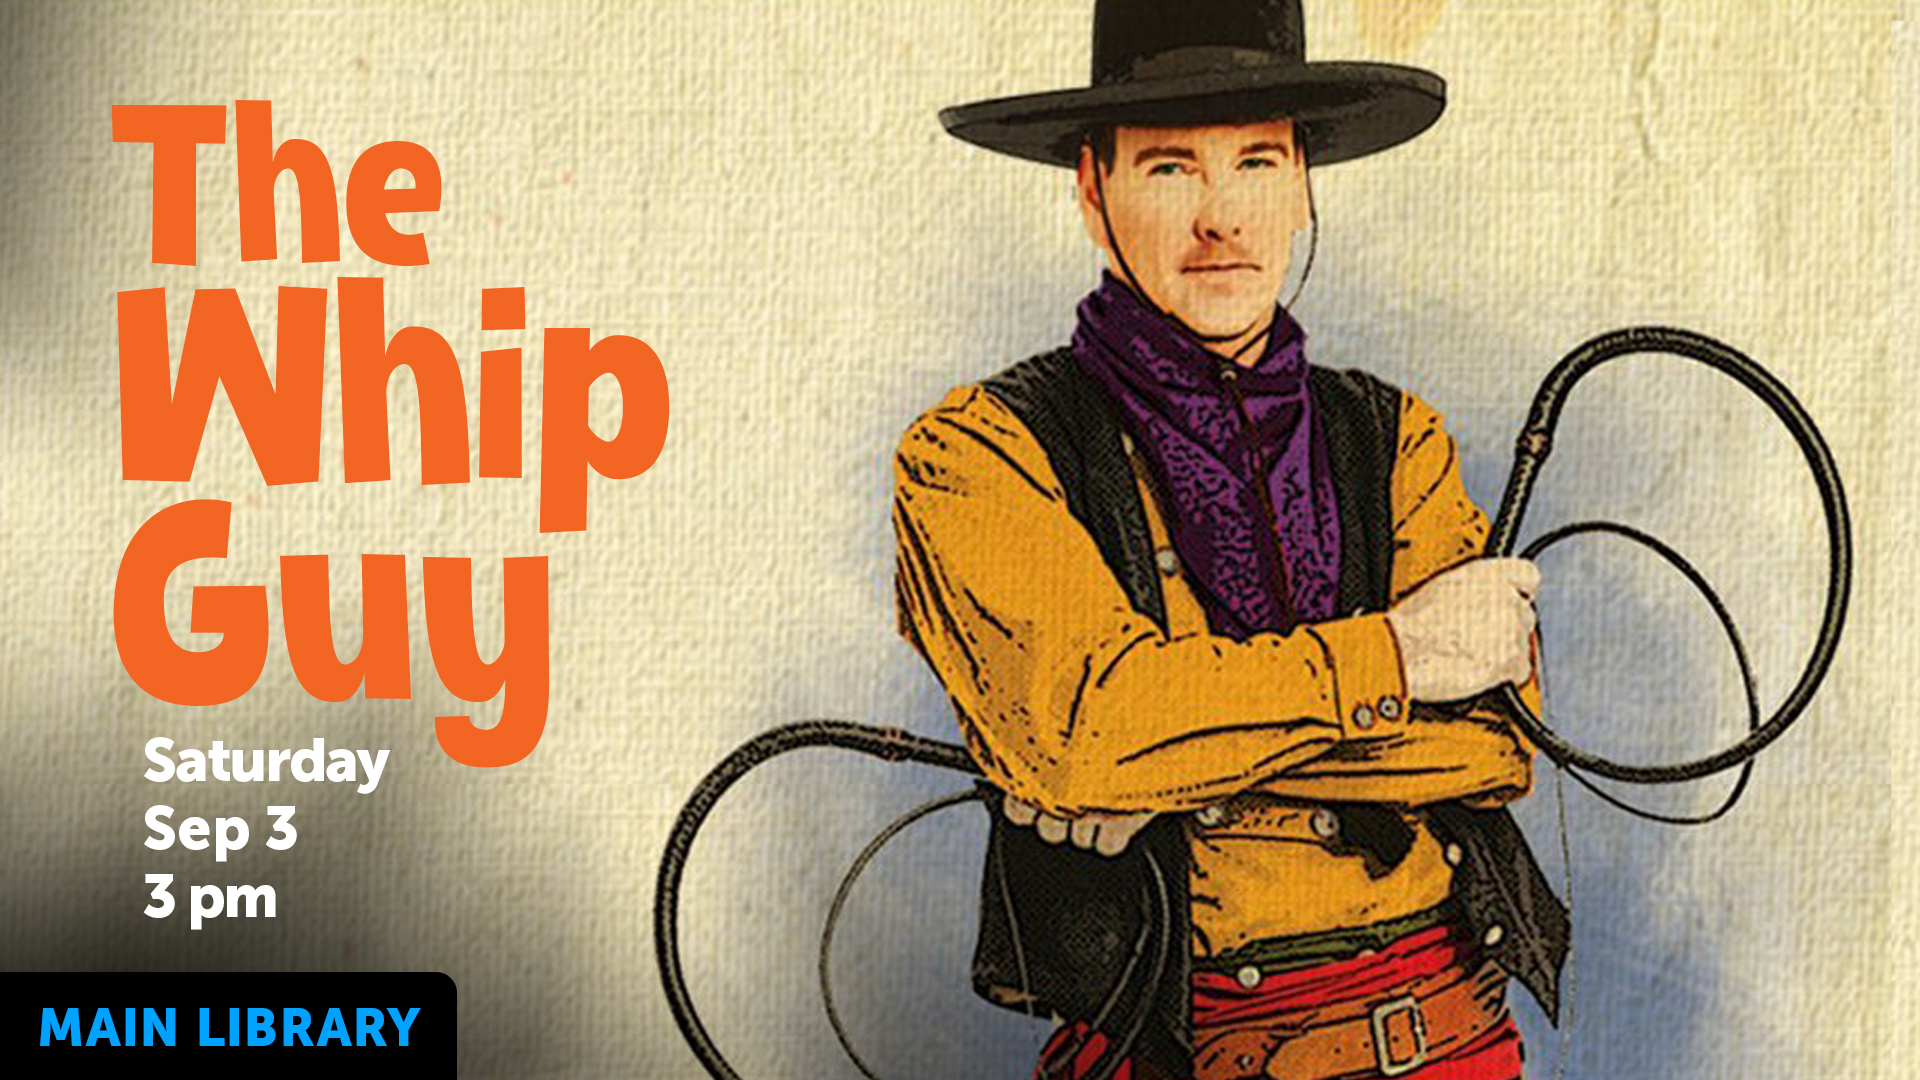 man holding bullwhips, wearing cowboy hat